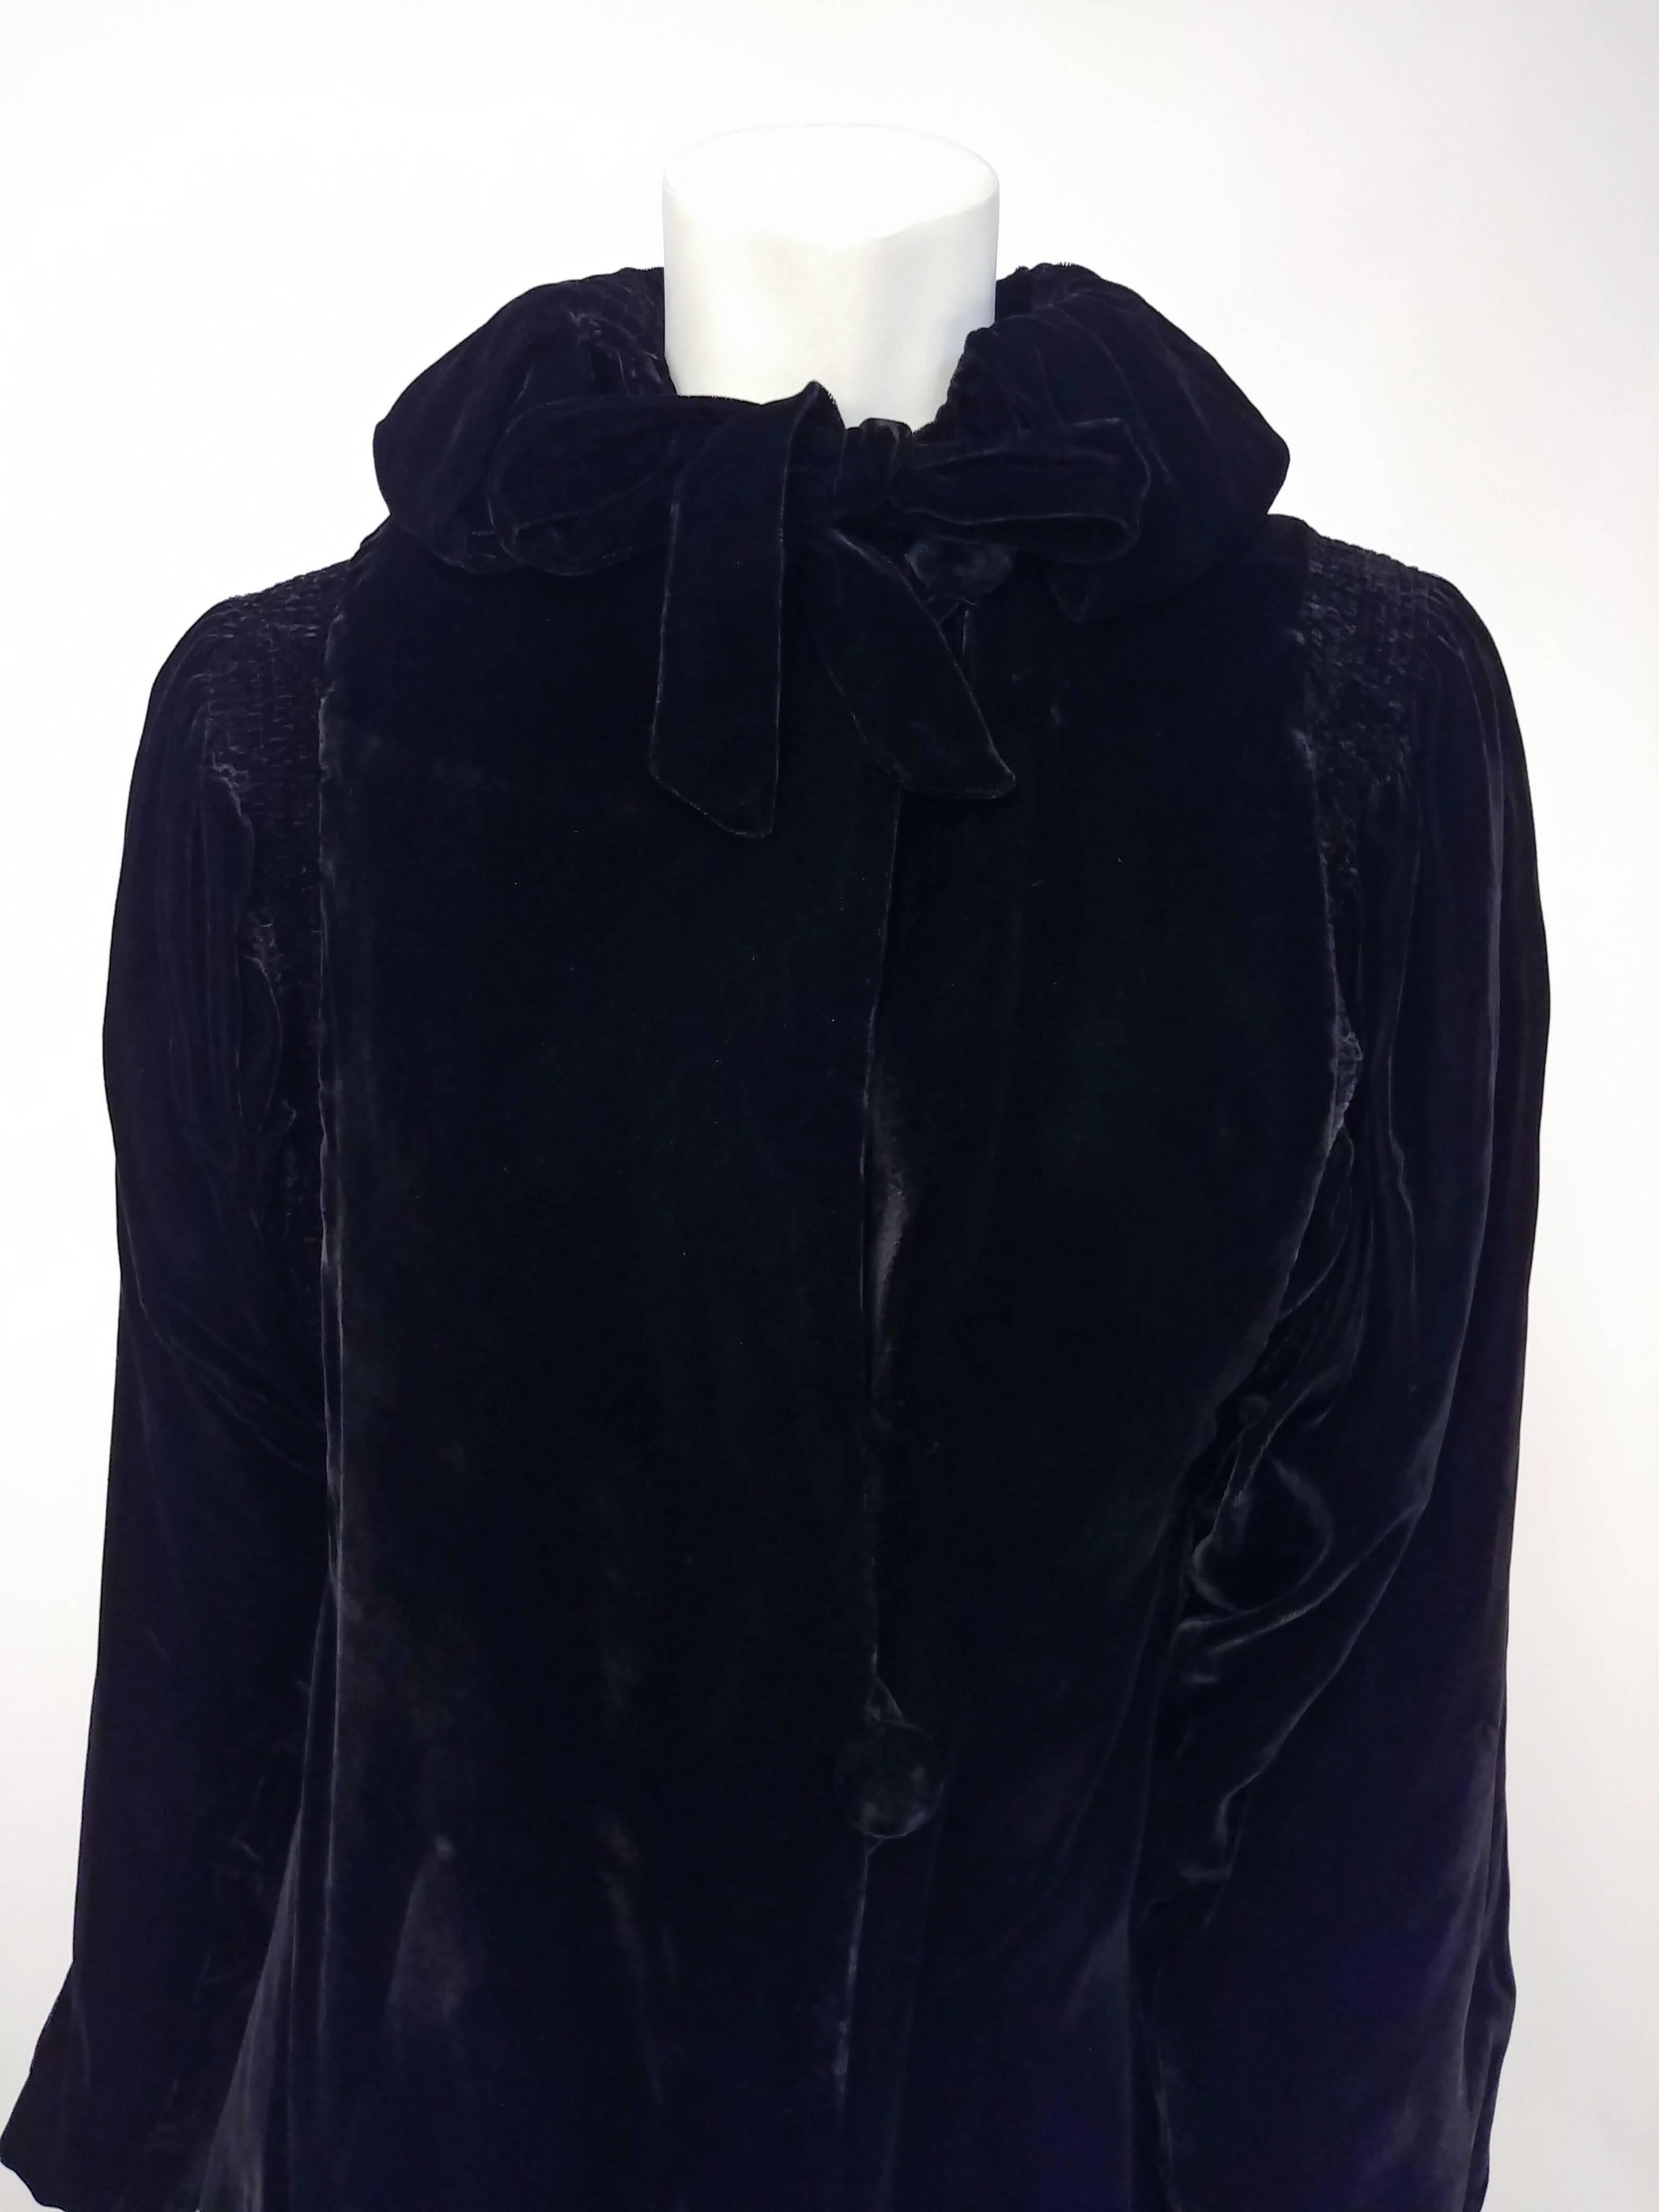 1940s Black Silk Velvet Opera Coat. Full length velvet coat with smocking detail at shoulders and back neck, ties at front neck and buttons down front. 

Shoulder to shoulder: 16